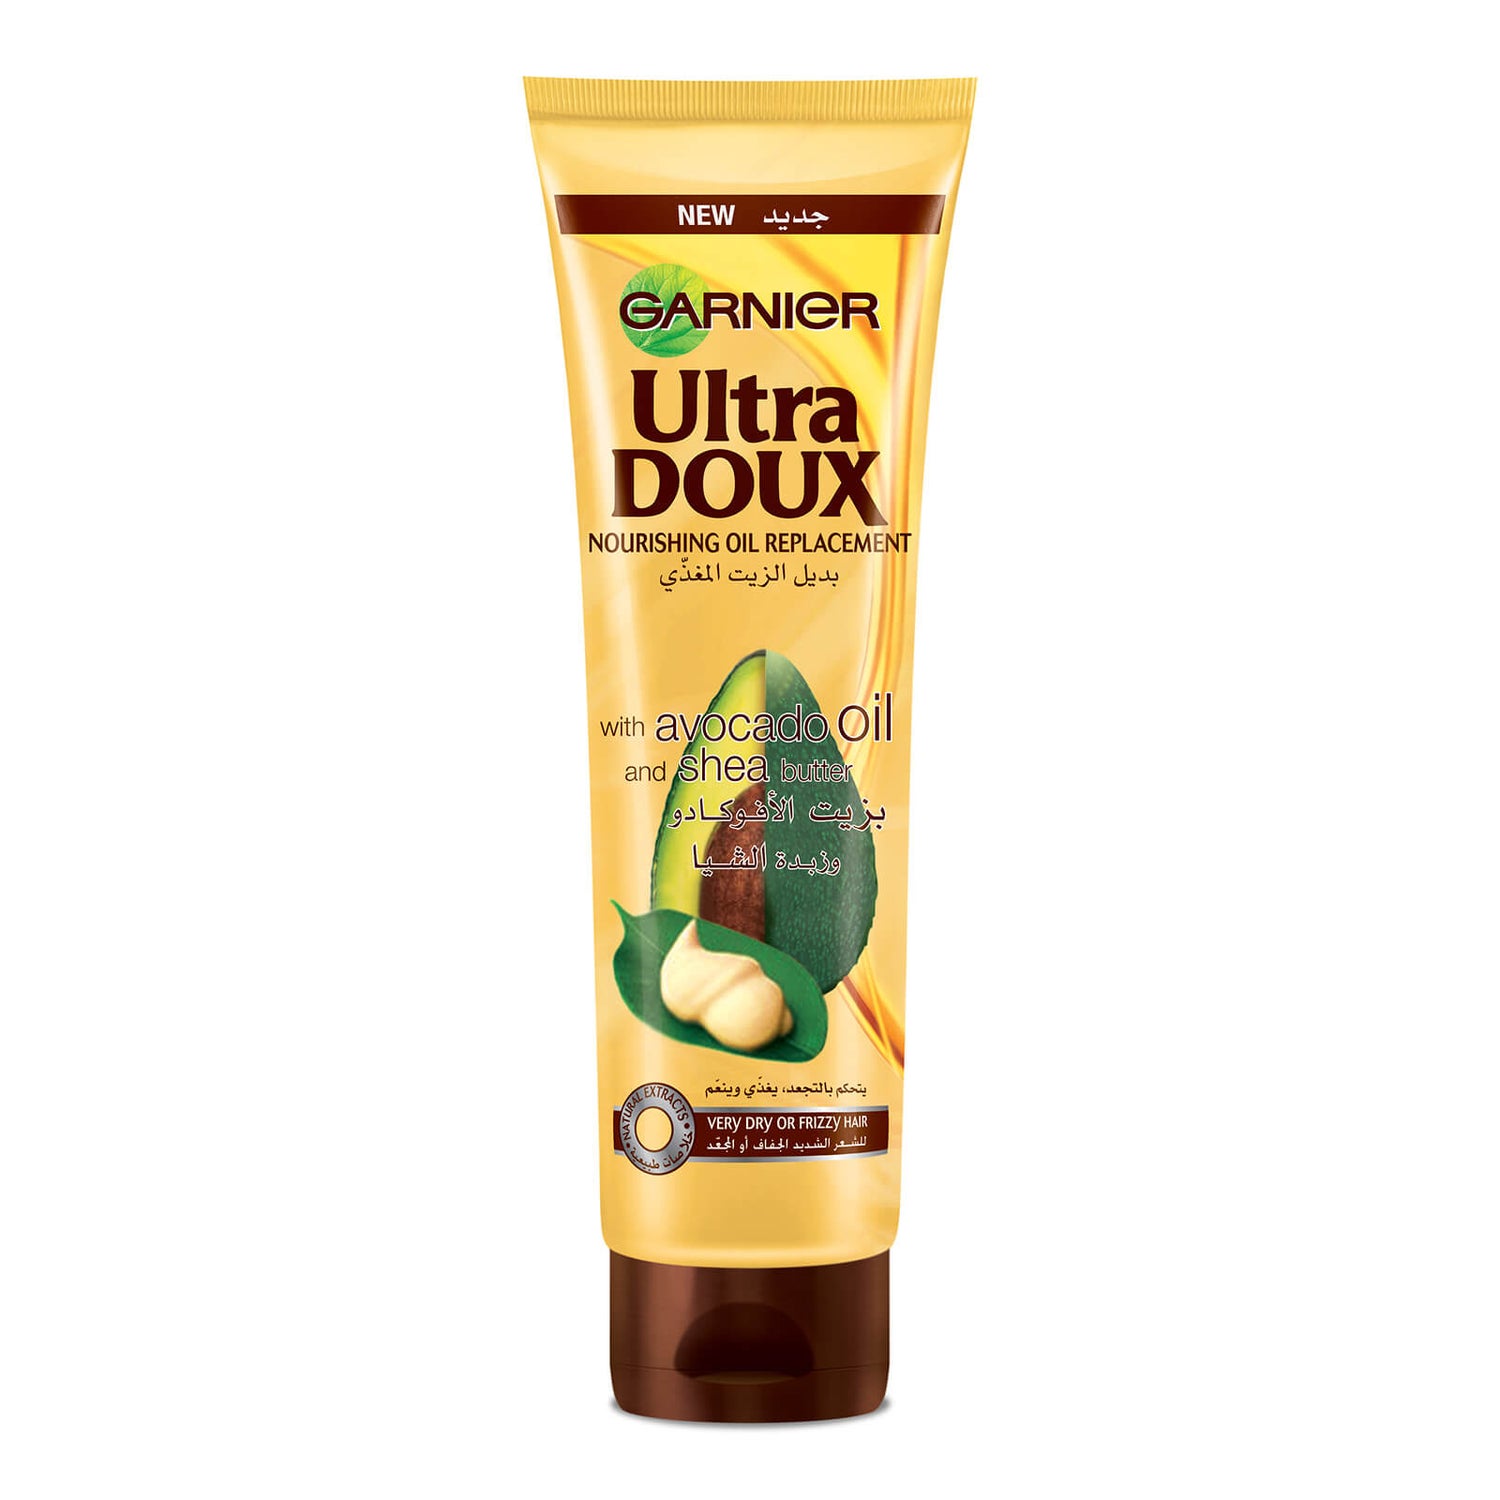 Garnier Ultra Doux Avocado Oil and Shea Butter Nourishing Oil Replacement 300ml